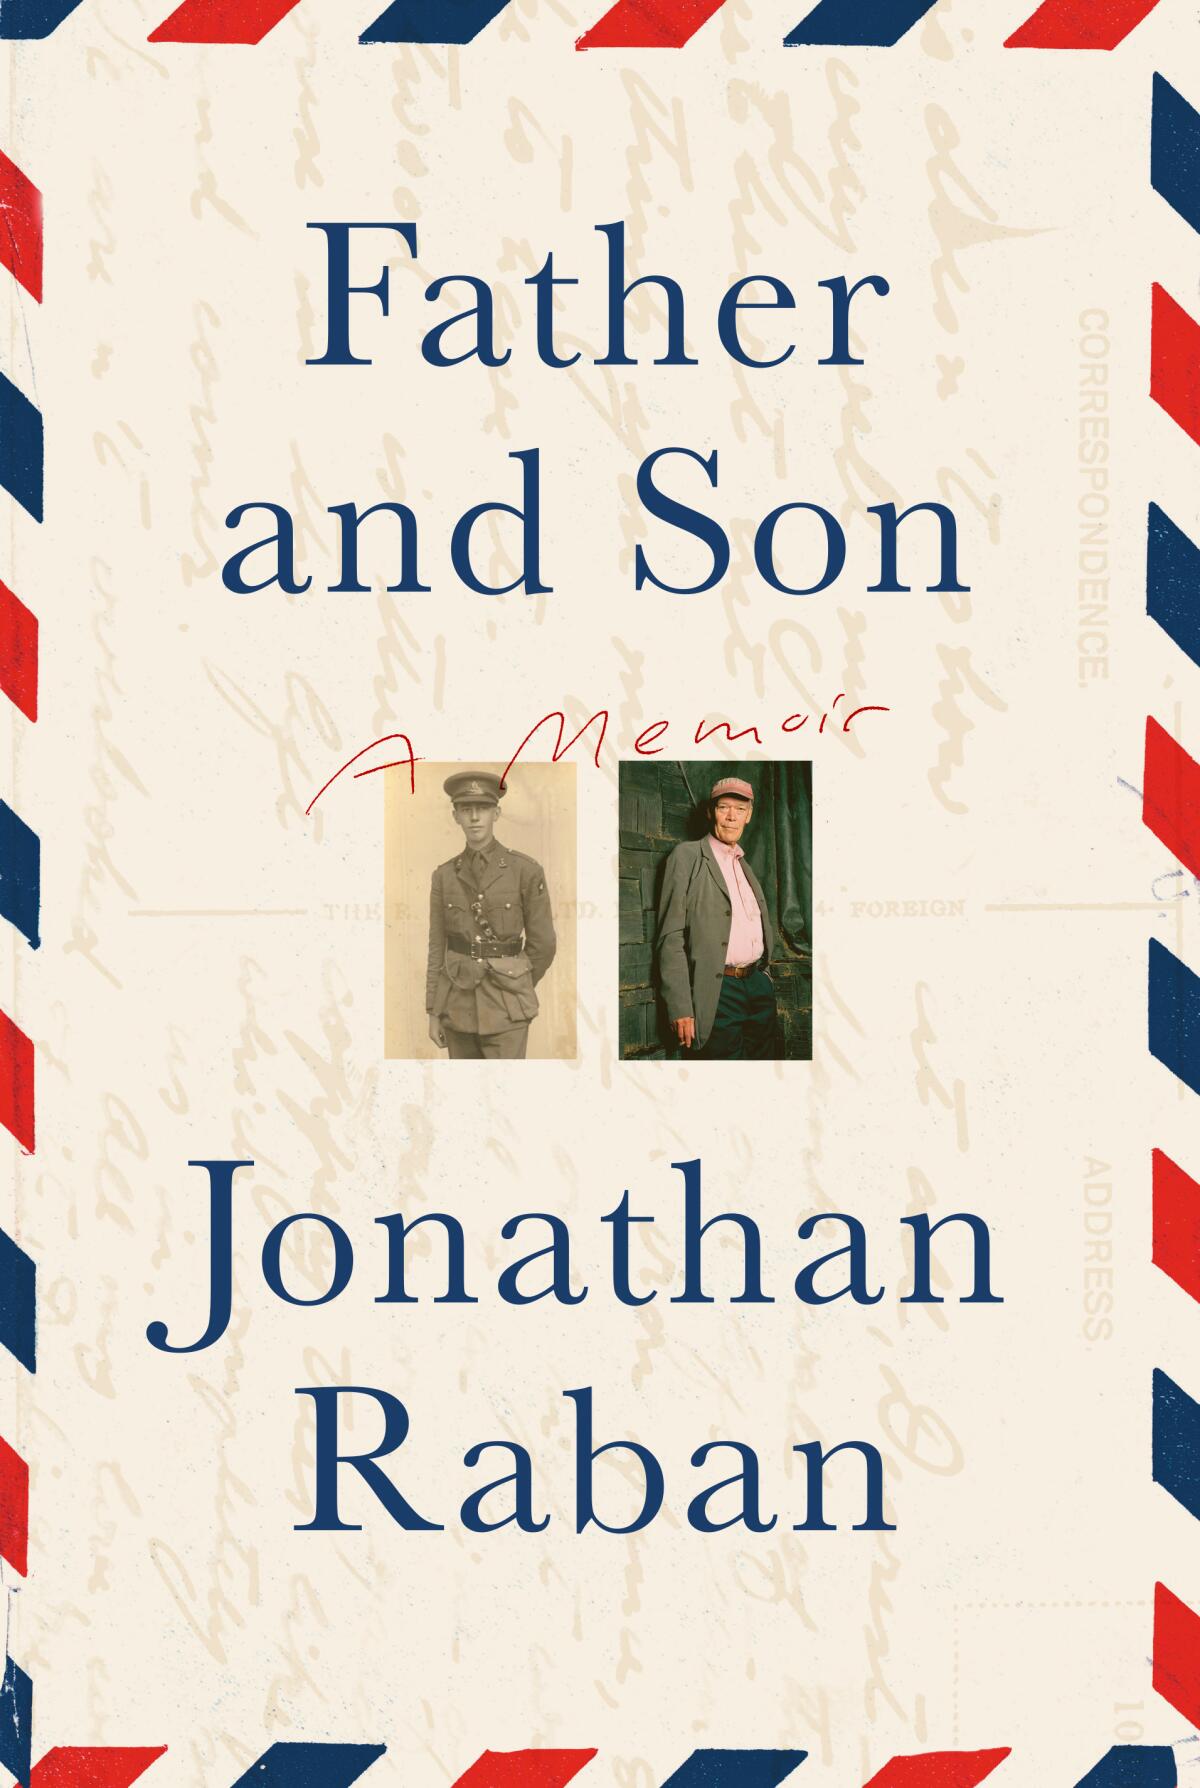 "Father and Son," by Jonathan Raban